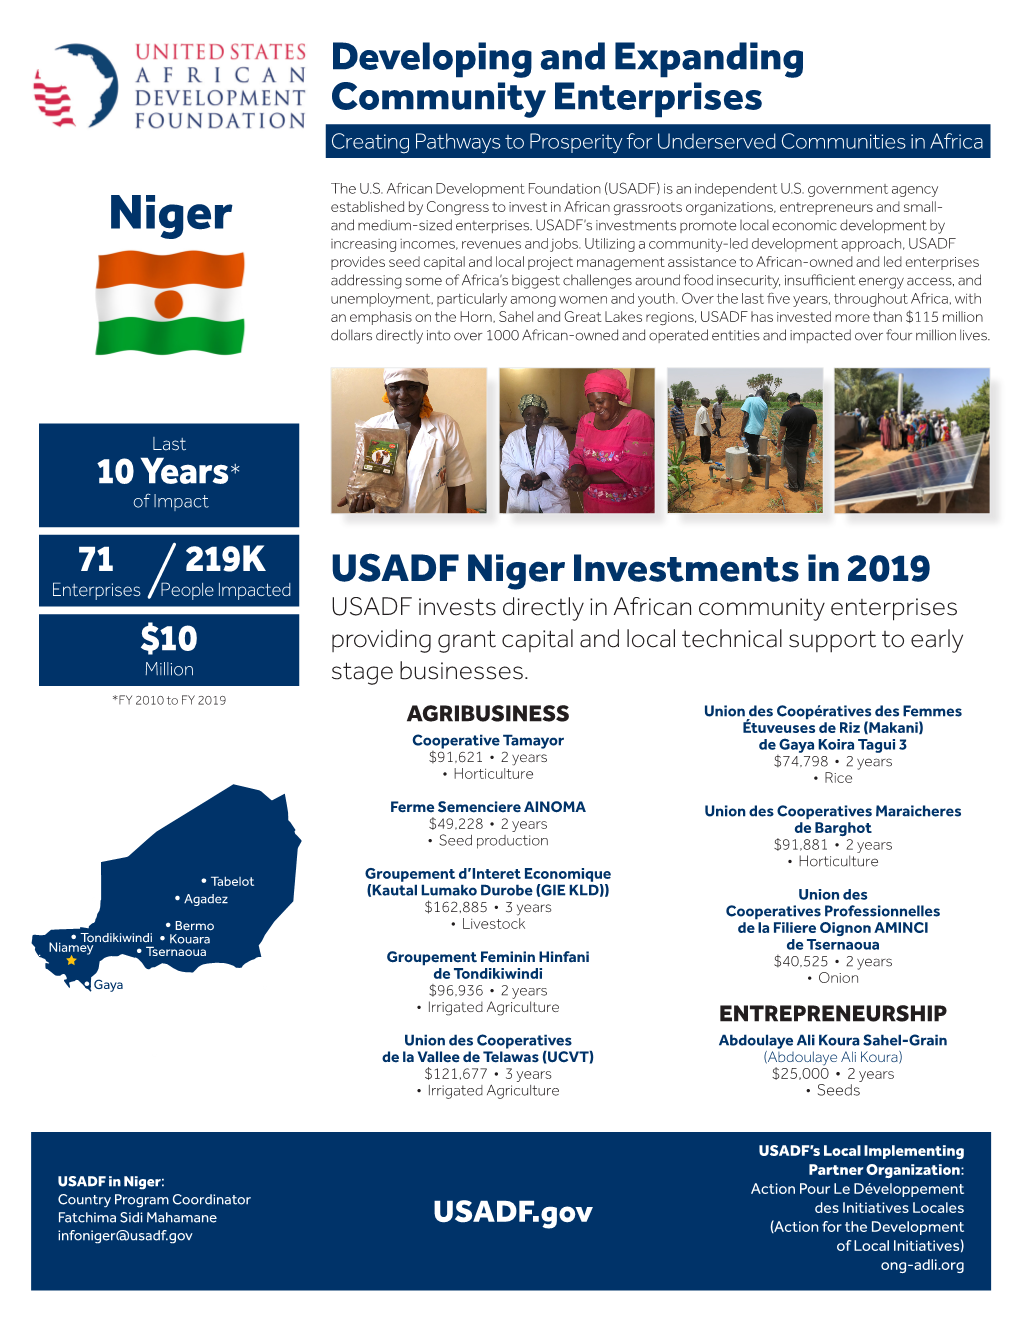 Niger and Medium-Sized Enterprises